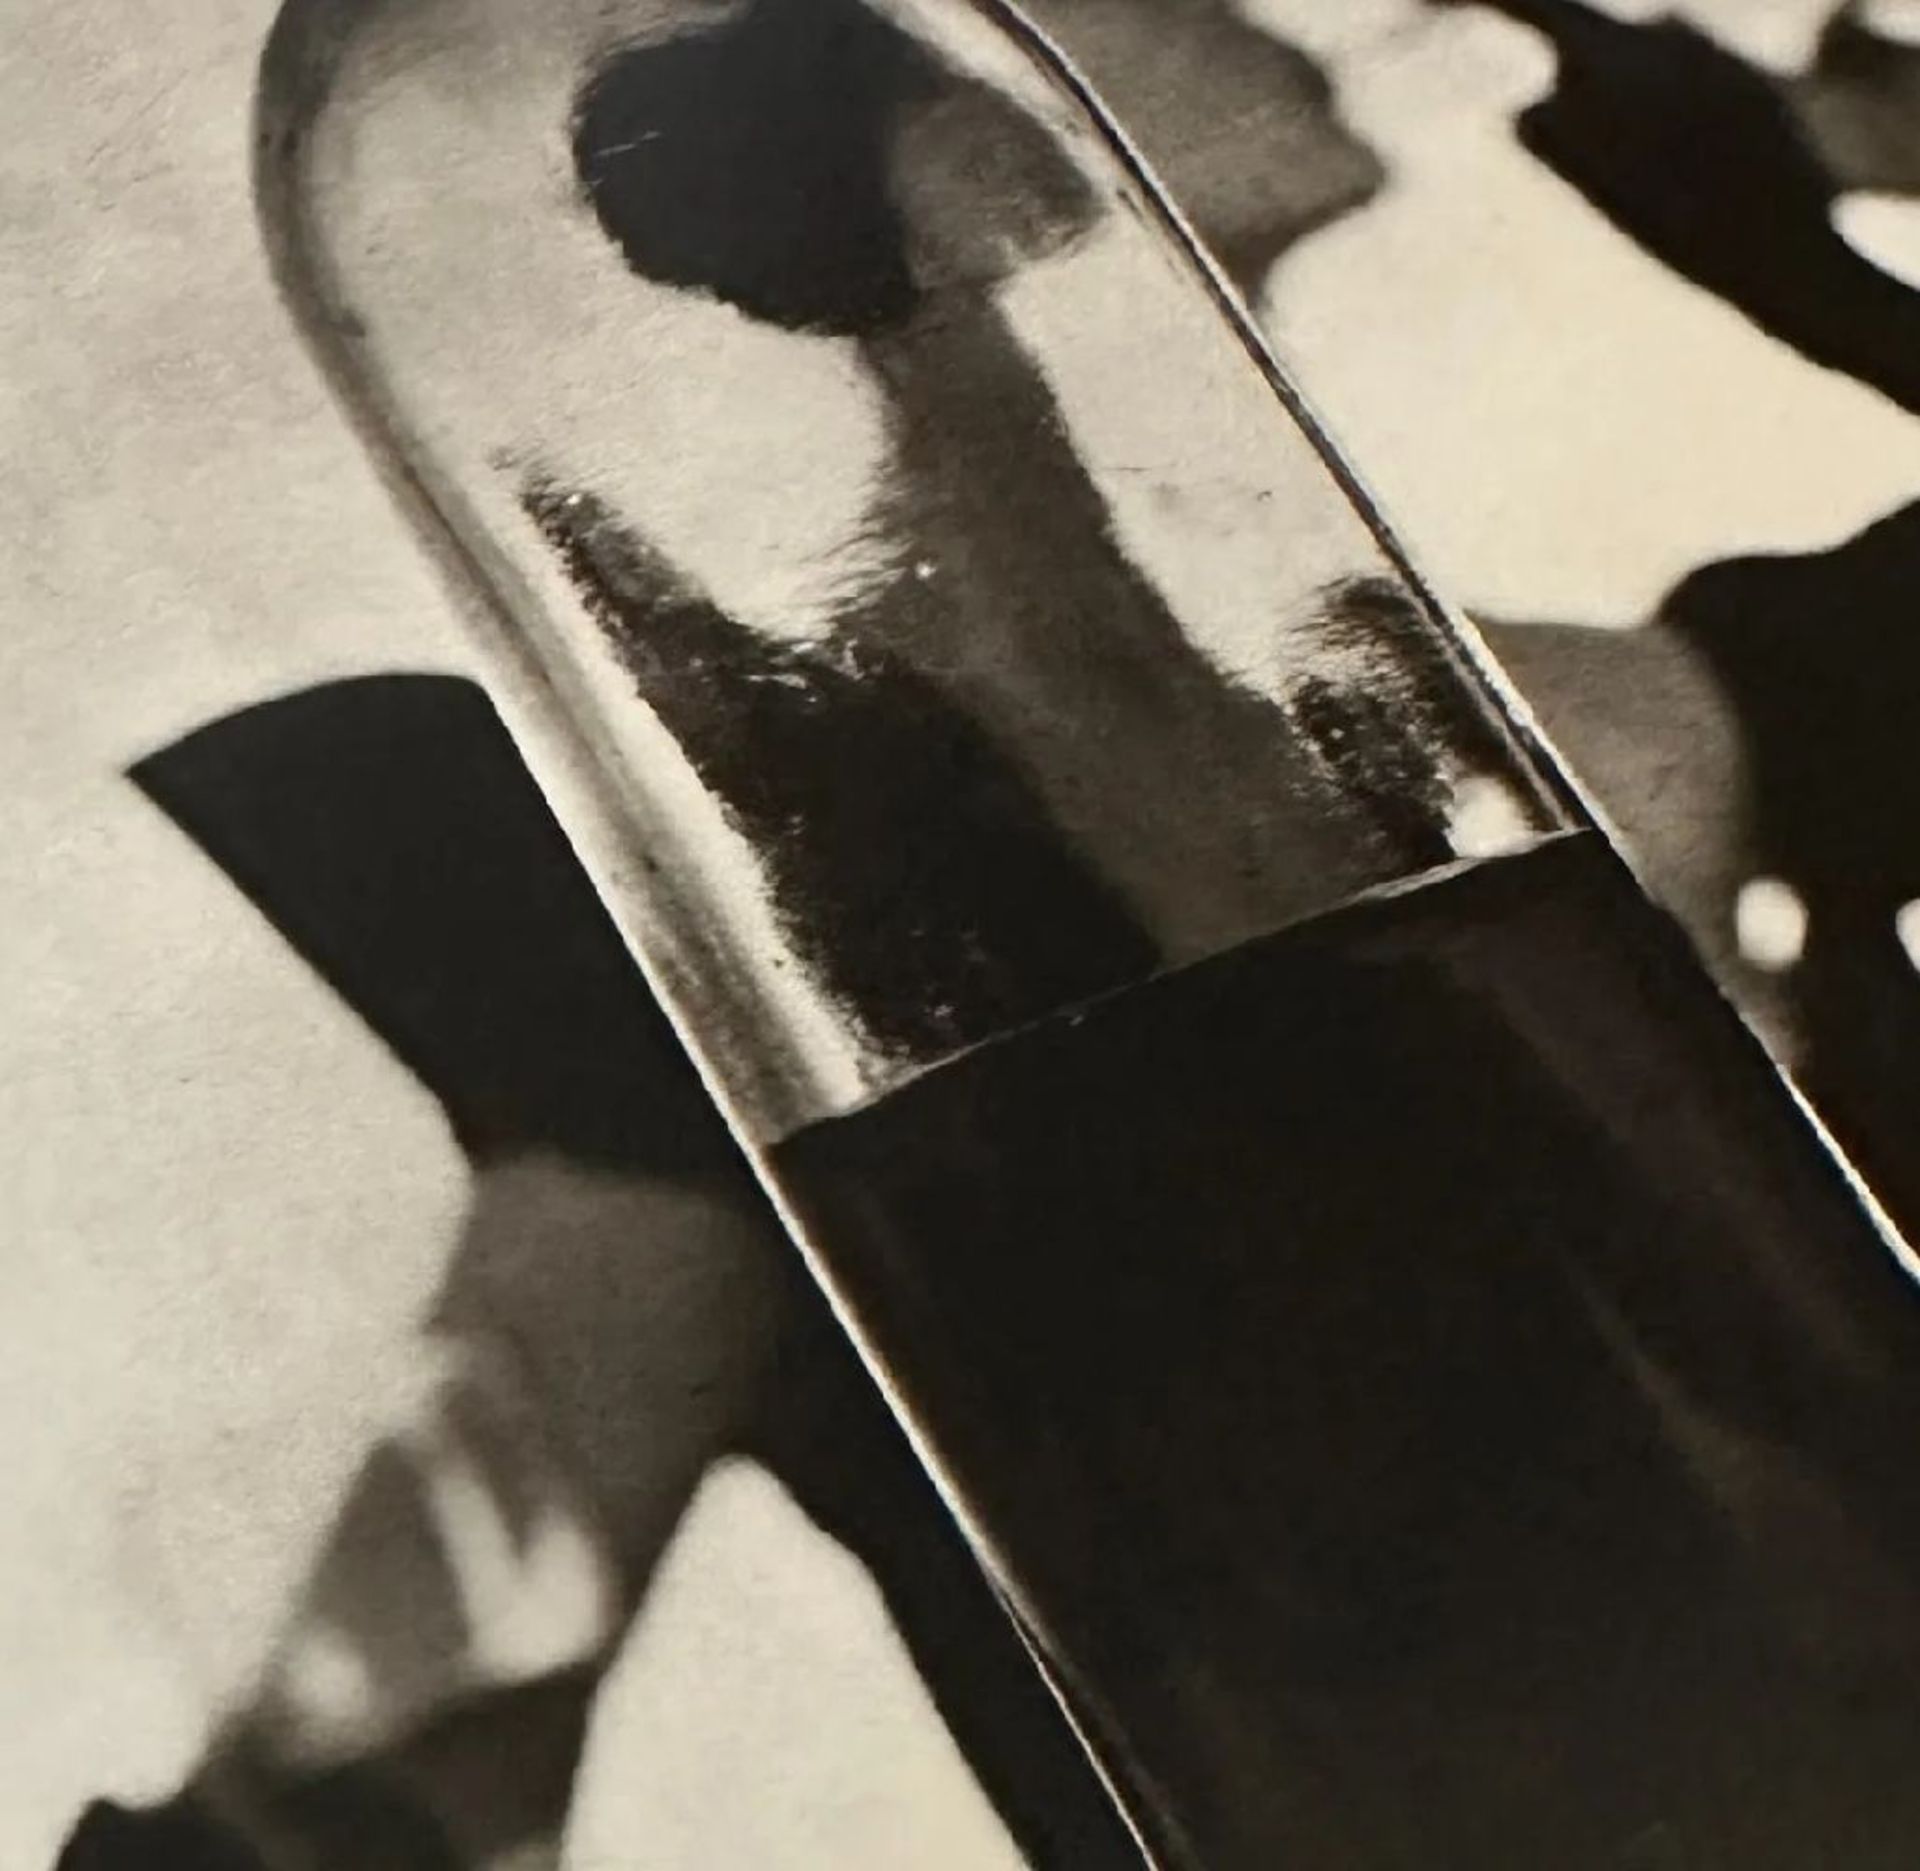 Irving Penn "Untitled" Print - Image 6 of 6